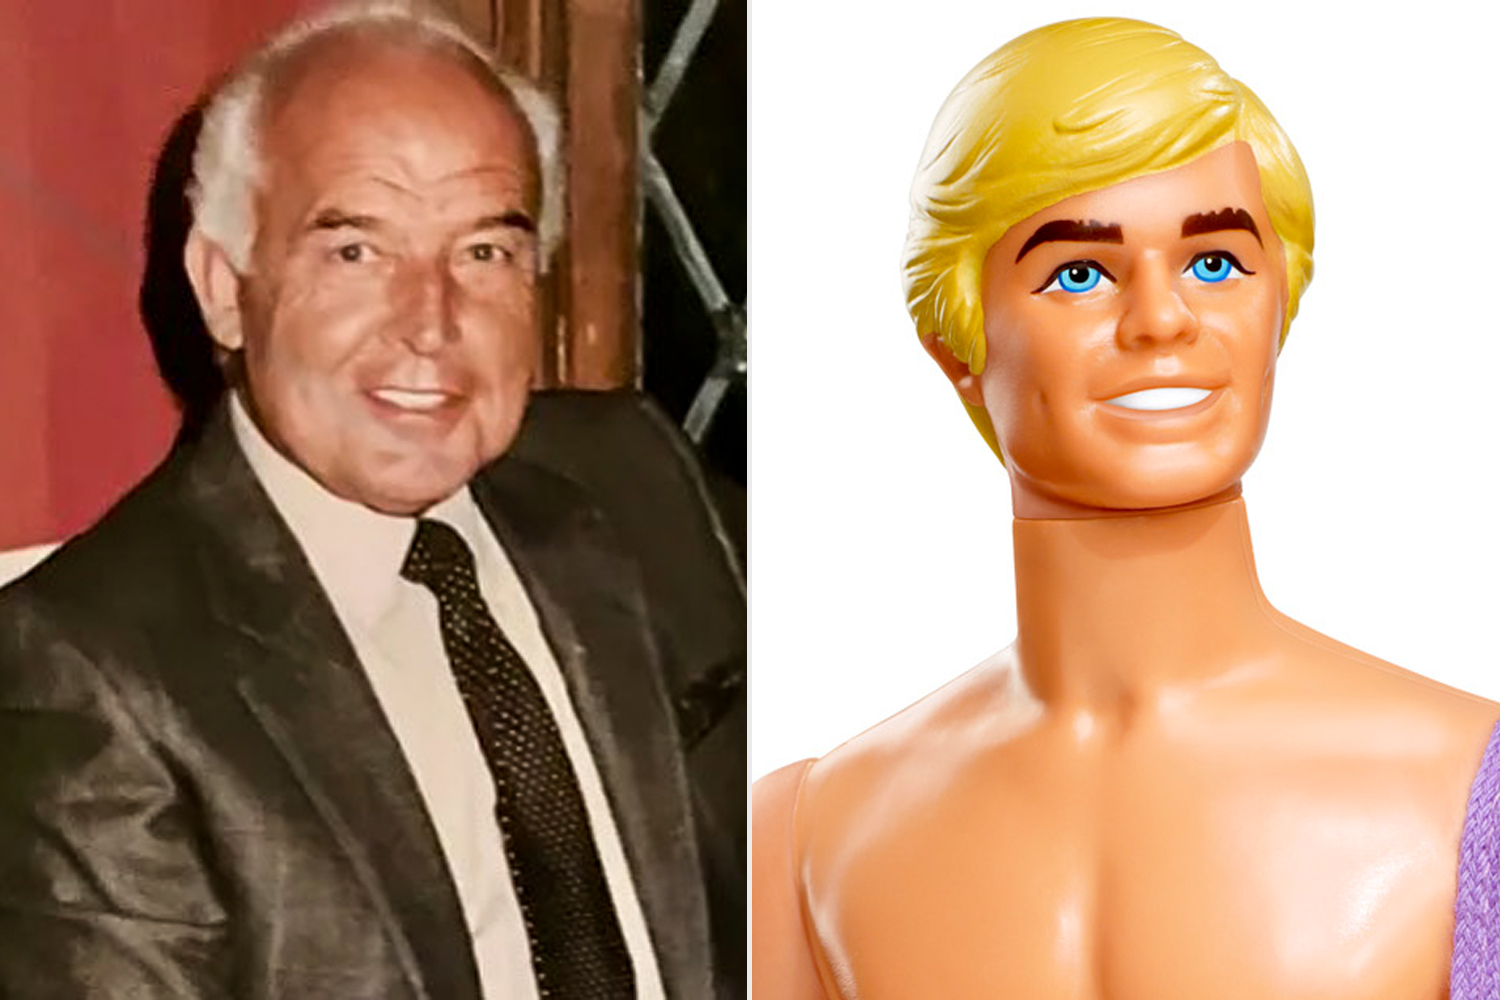 Bill Cunningham was the original voice of Mattel's Ken doll